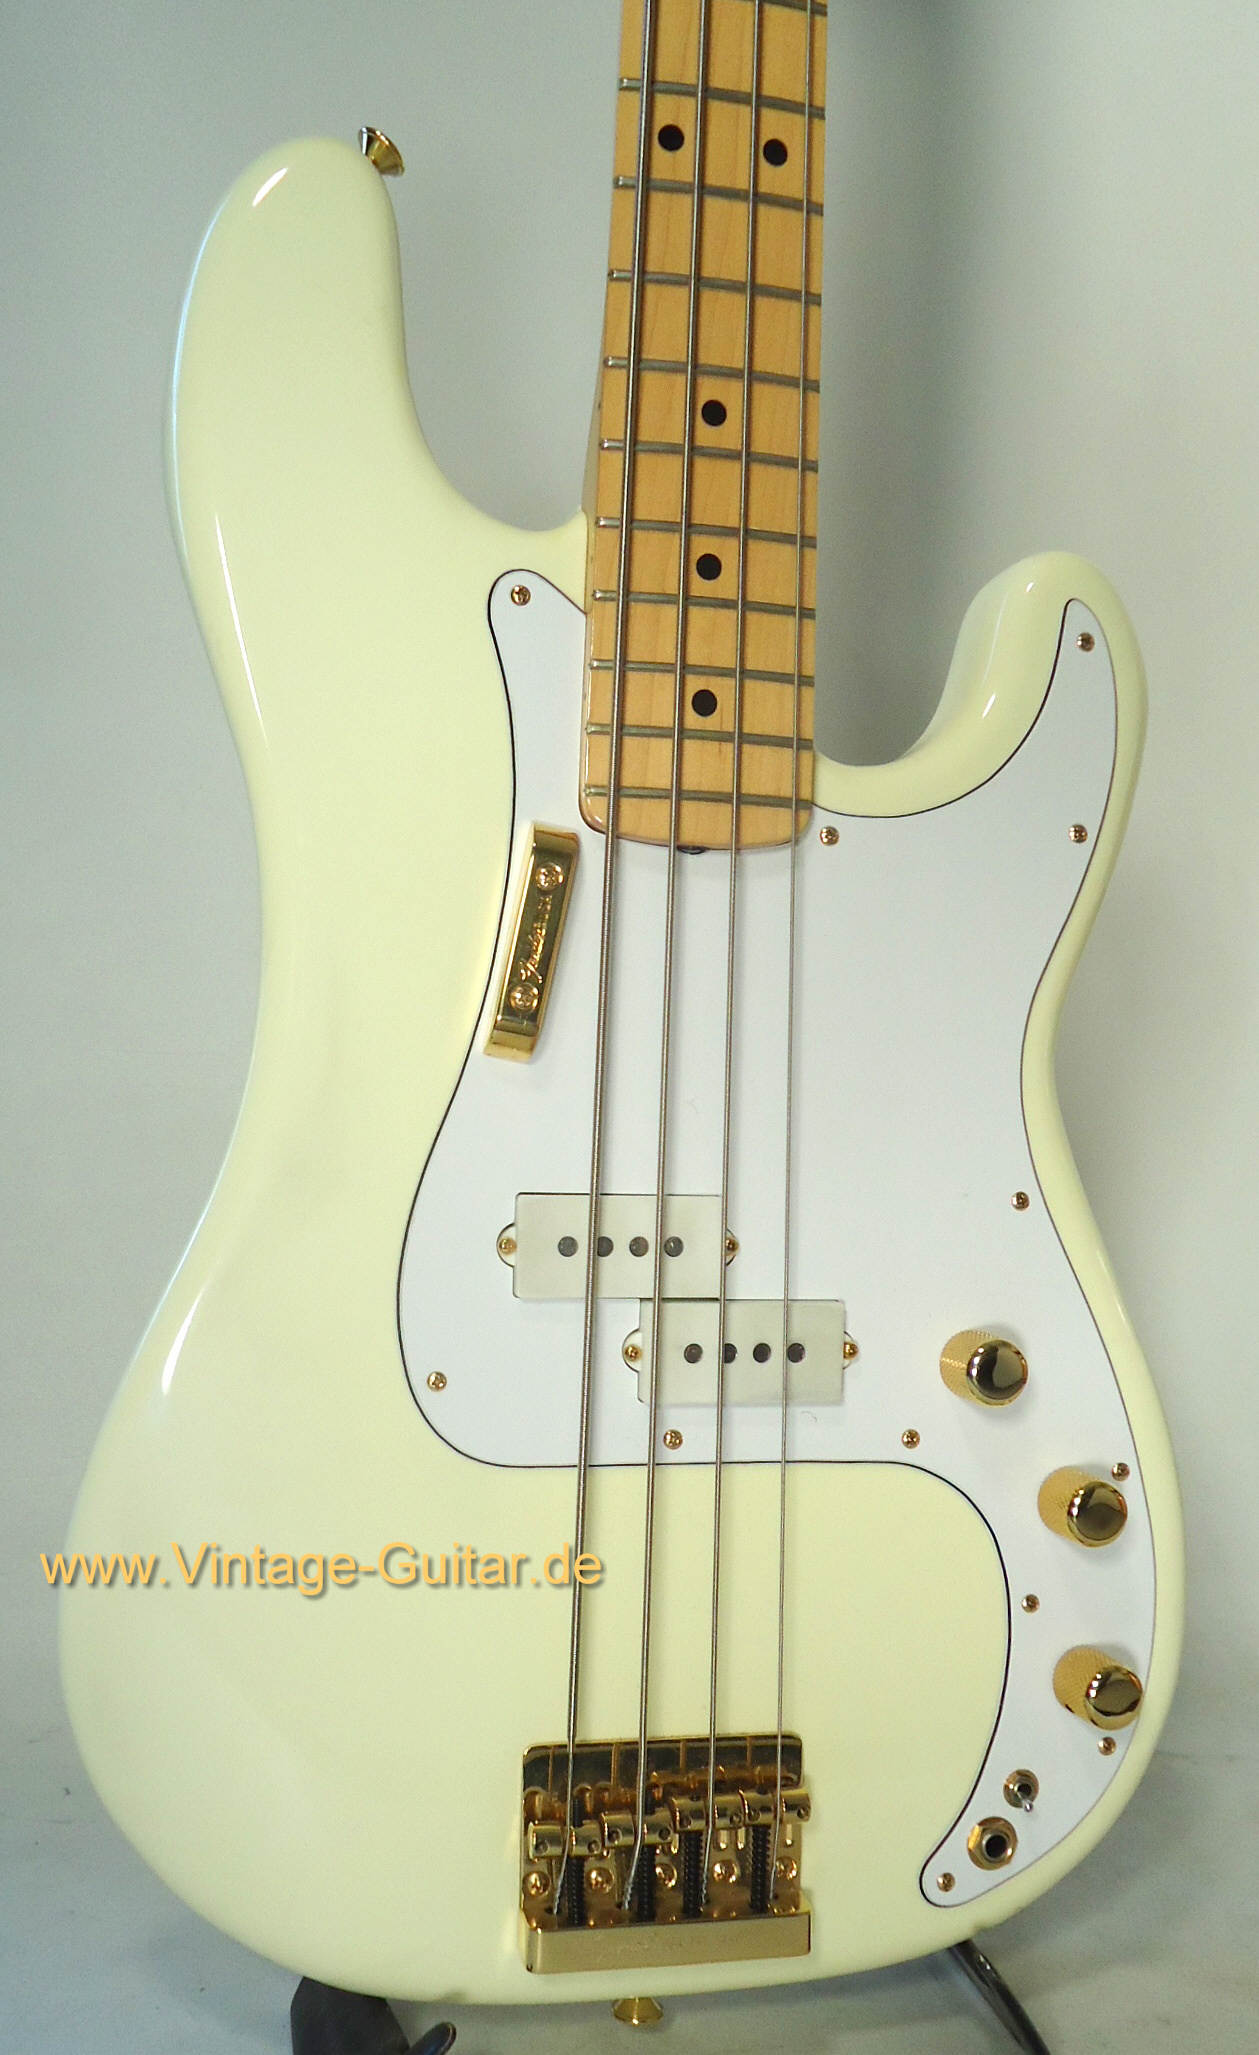 Fender-Precision-Special-1982-white-body.jpg